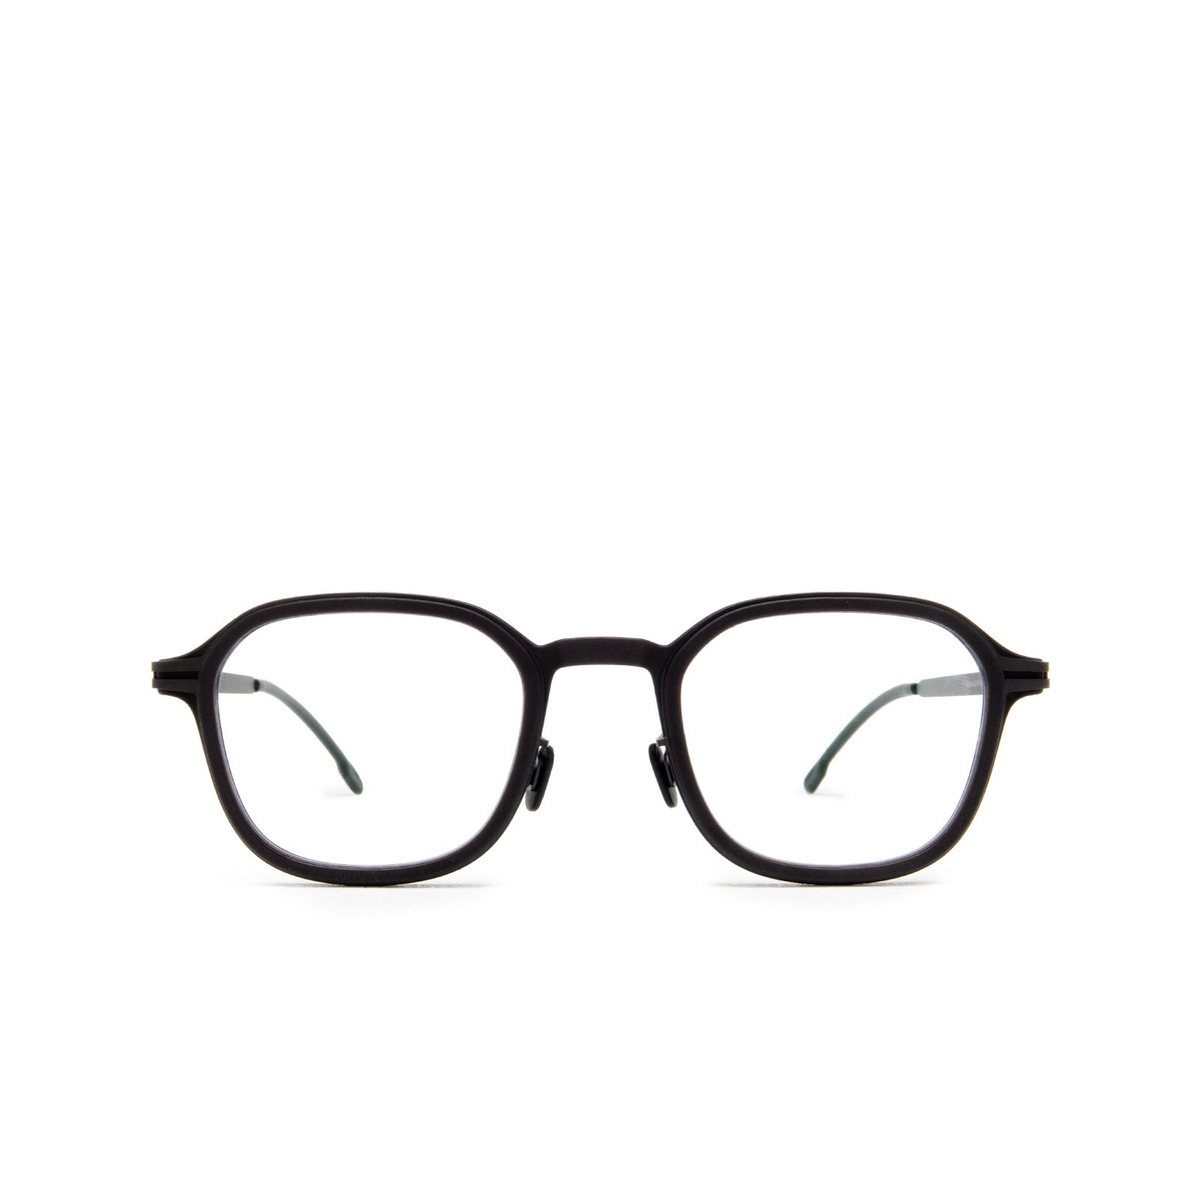 Mykita FIR Eyeglasses 579 MH6 Pitch Black/Black - front view